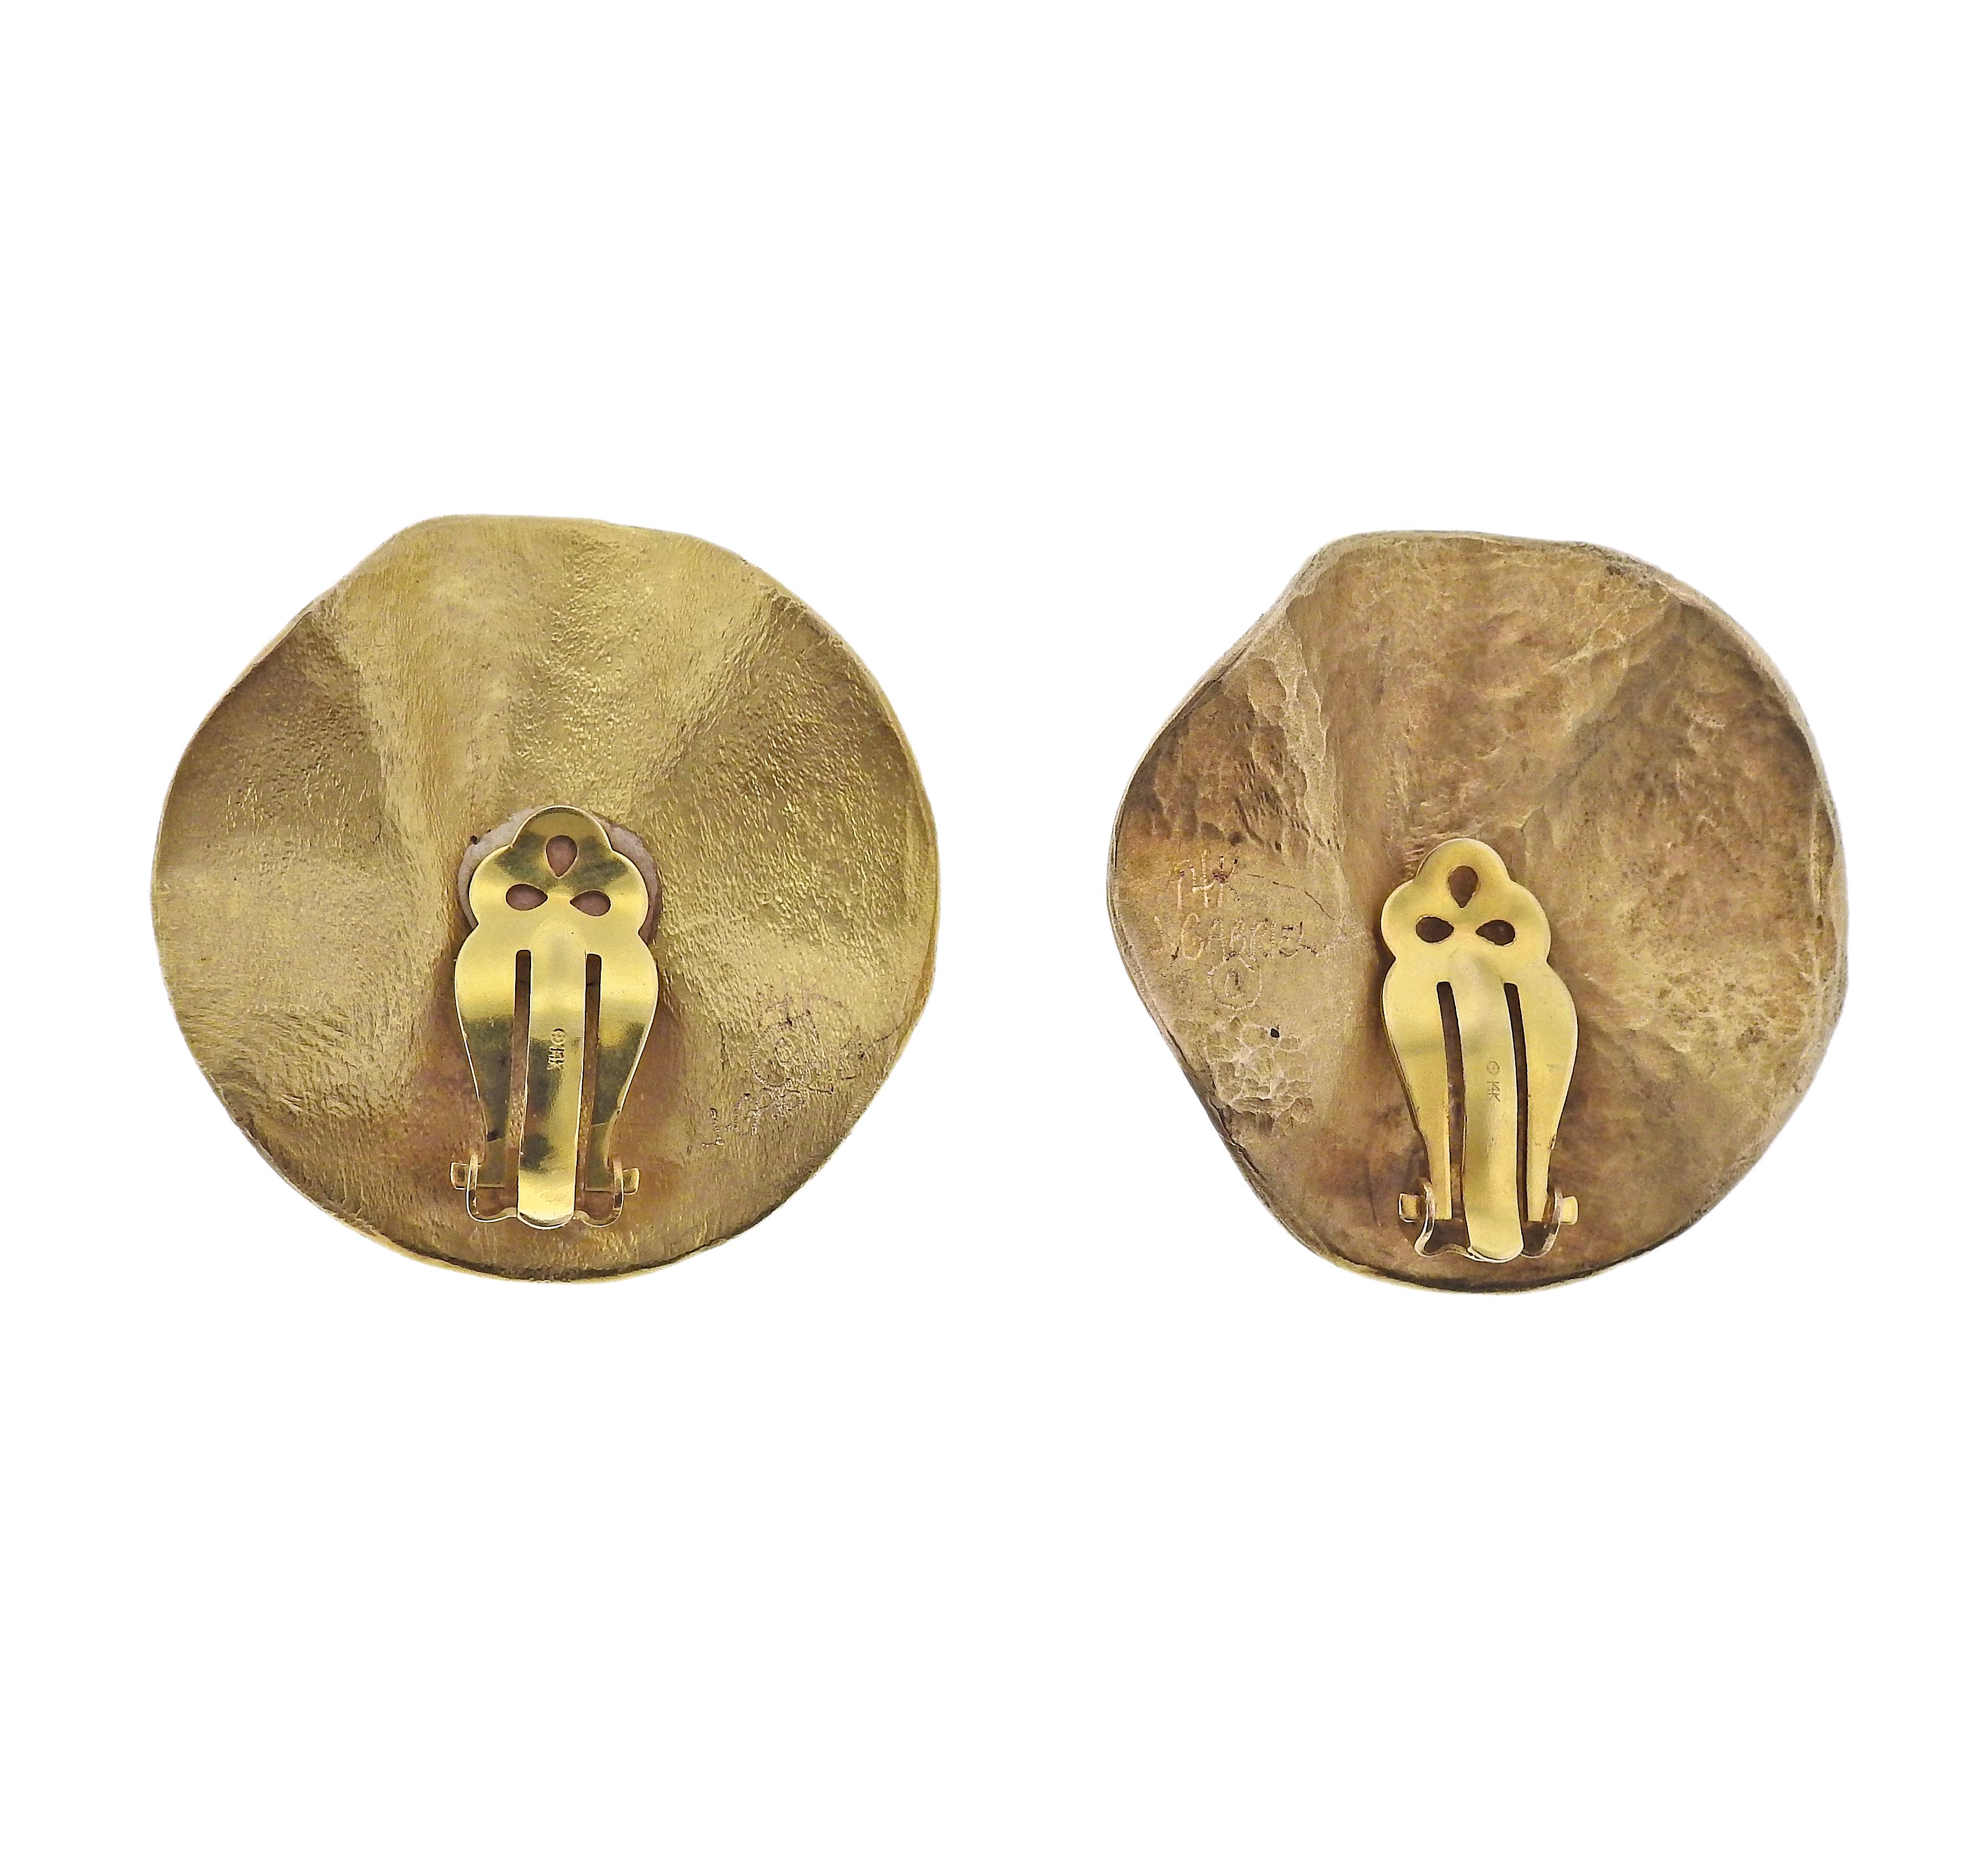 Pair of 14k gold large modernist earrings by J. Gabriel. Earrings are 38mm in diameter. Marked: J. Gabriel, 14k. Weight - 28.7 grams.